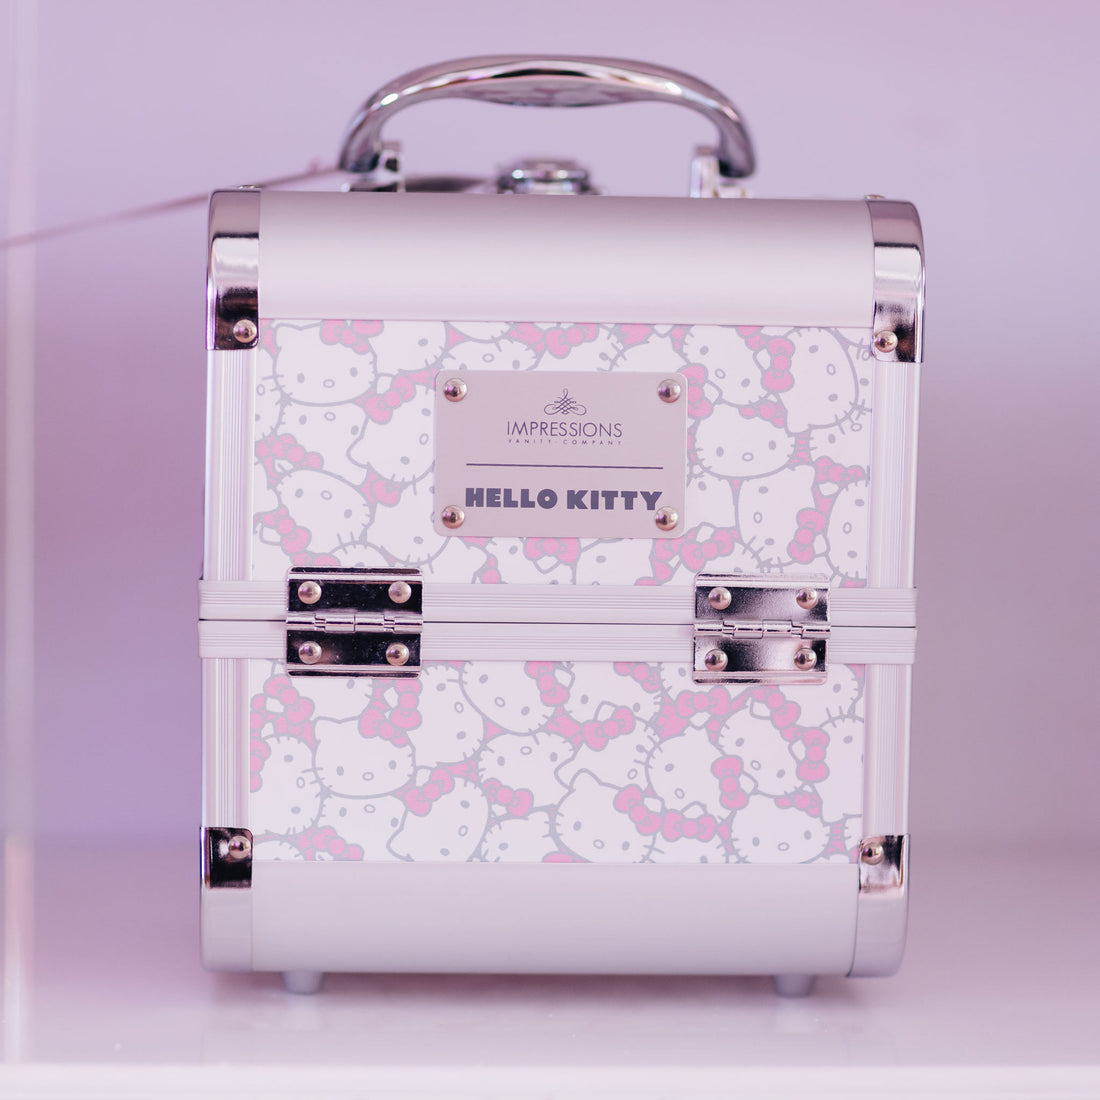 Hello Kitty SlayCube Makeup Travel Case